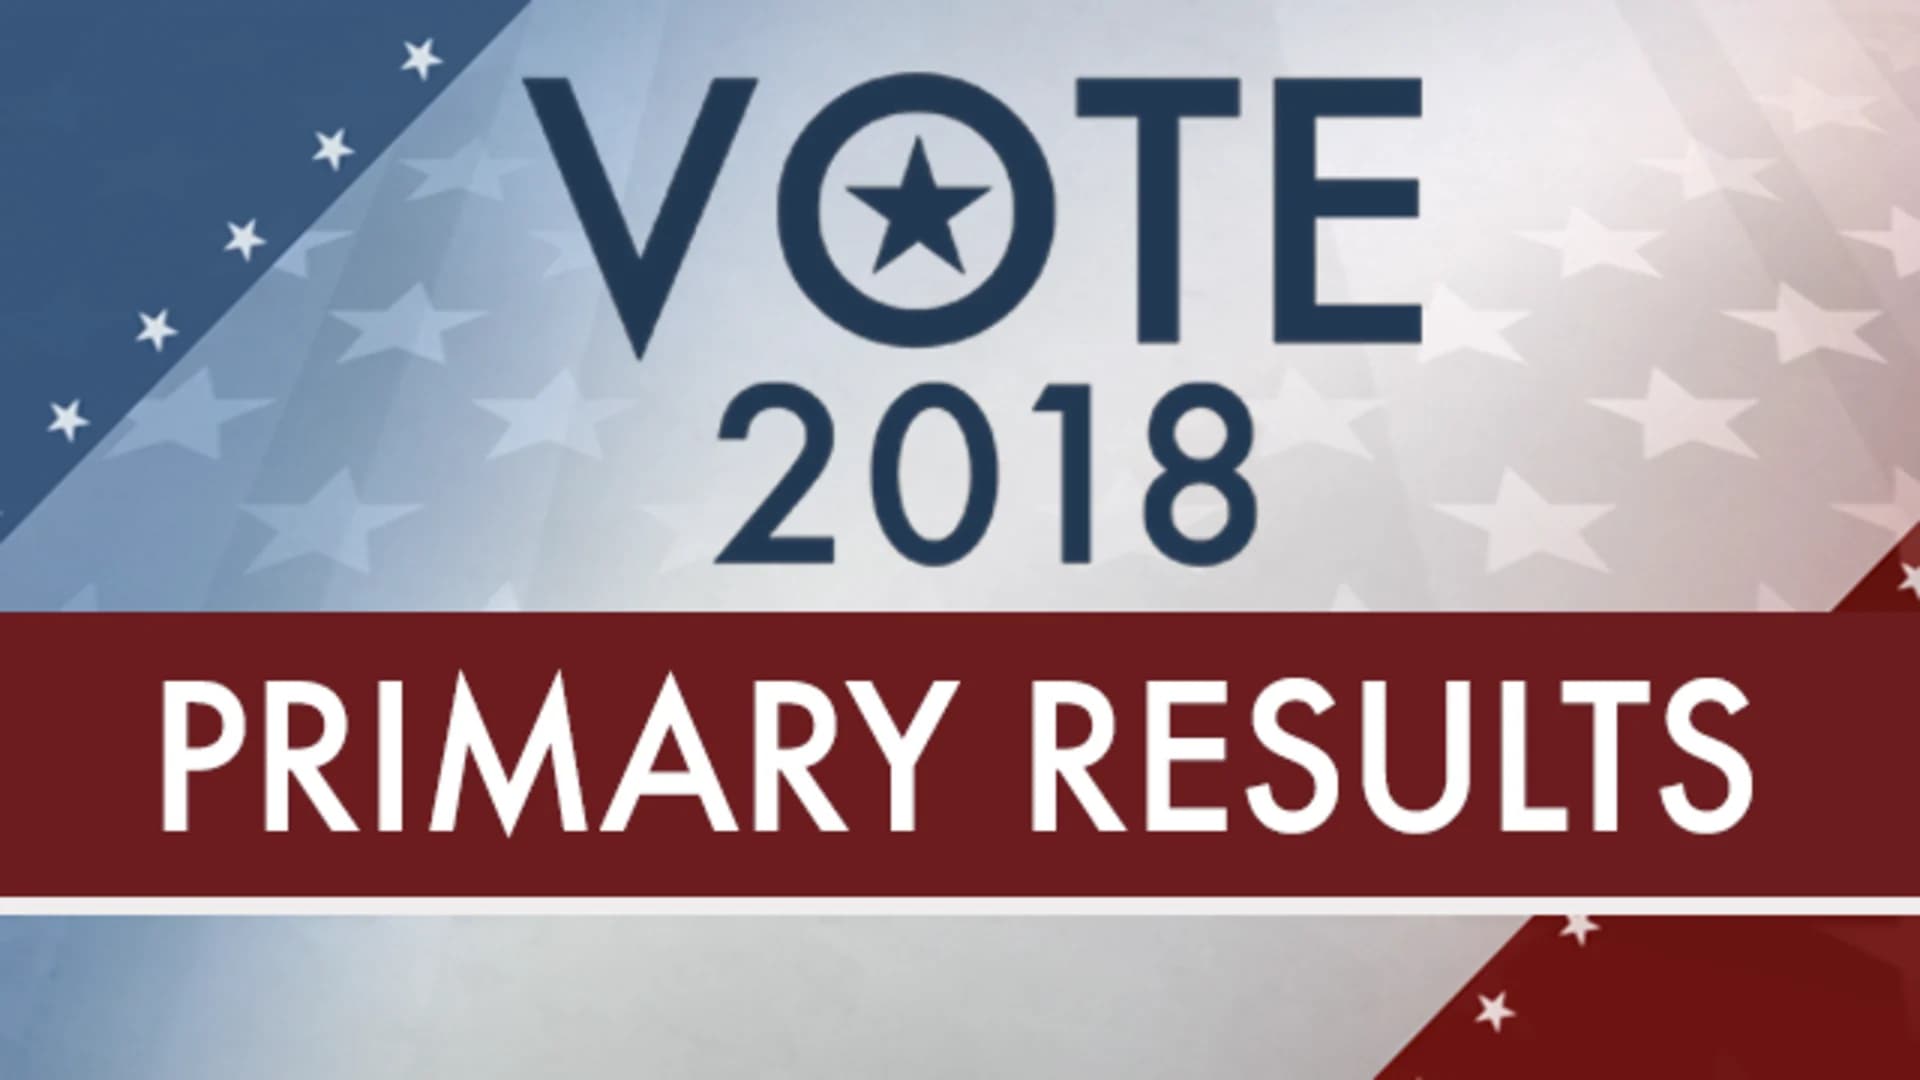 Hudson Valley Vote 2018: Primary Results